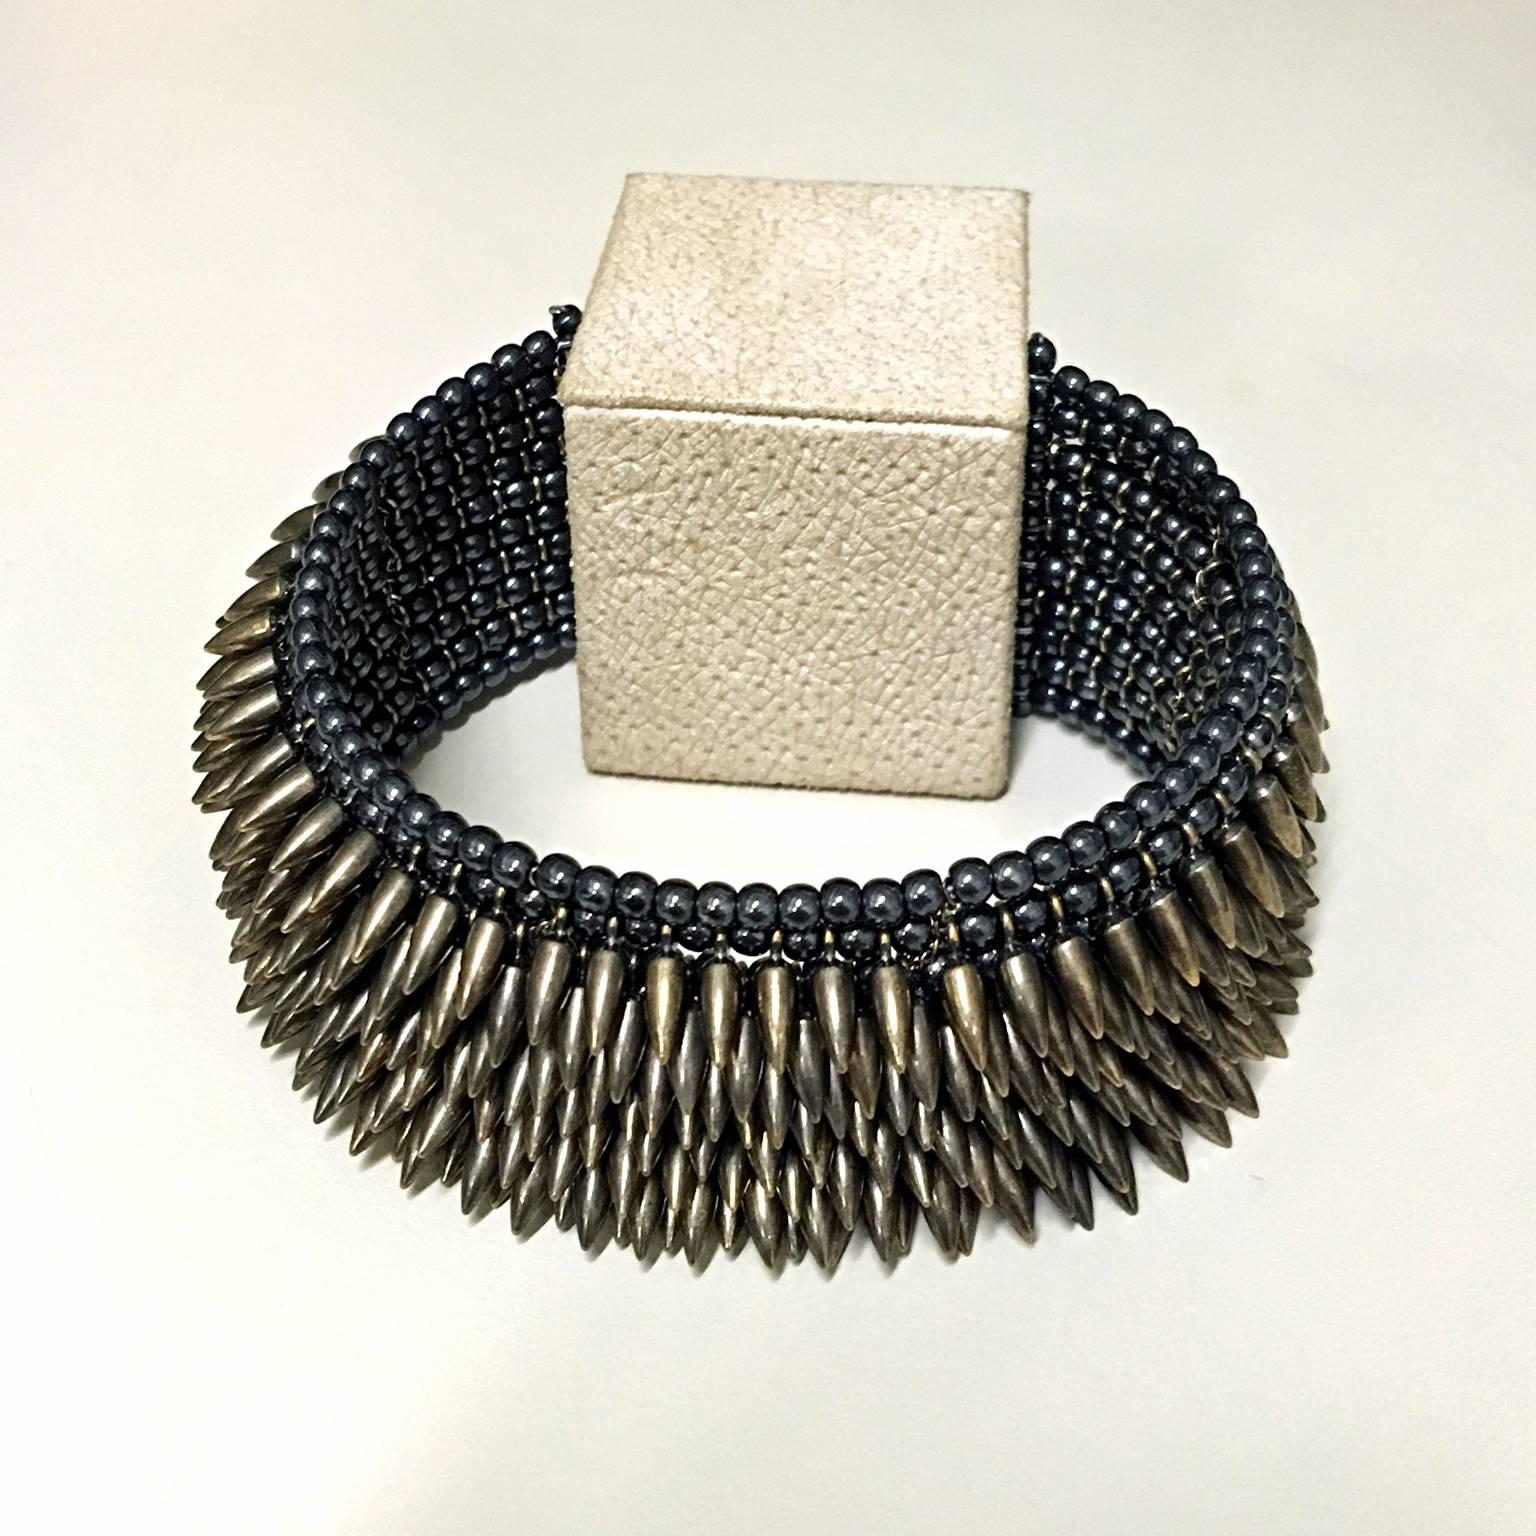 Artist Intricate Handmade Eight Row Steel Hematite Glass Bead Flexible Cuff Bracelet